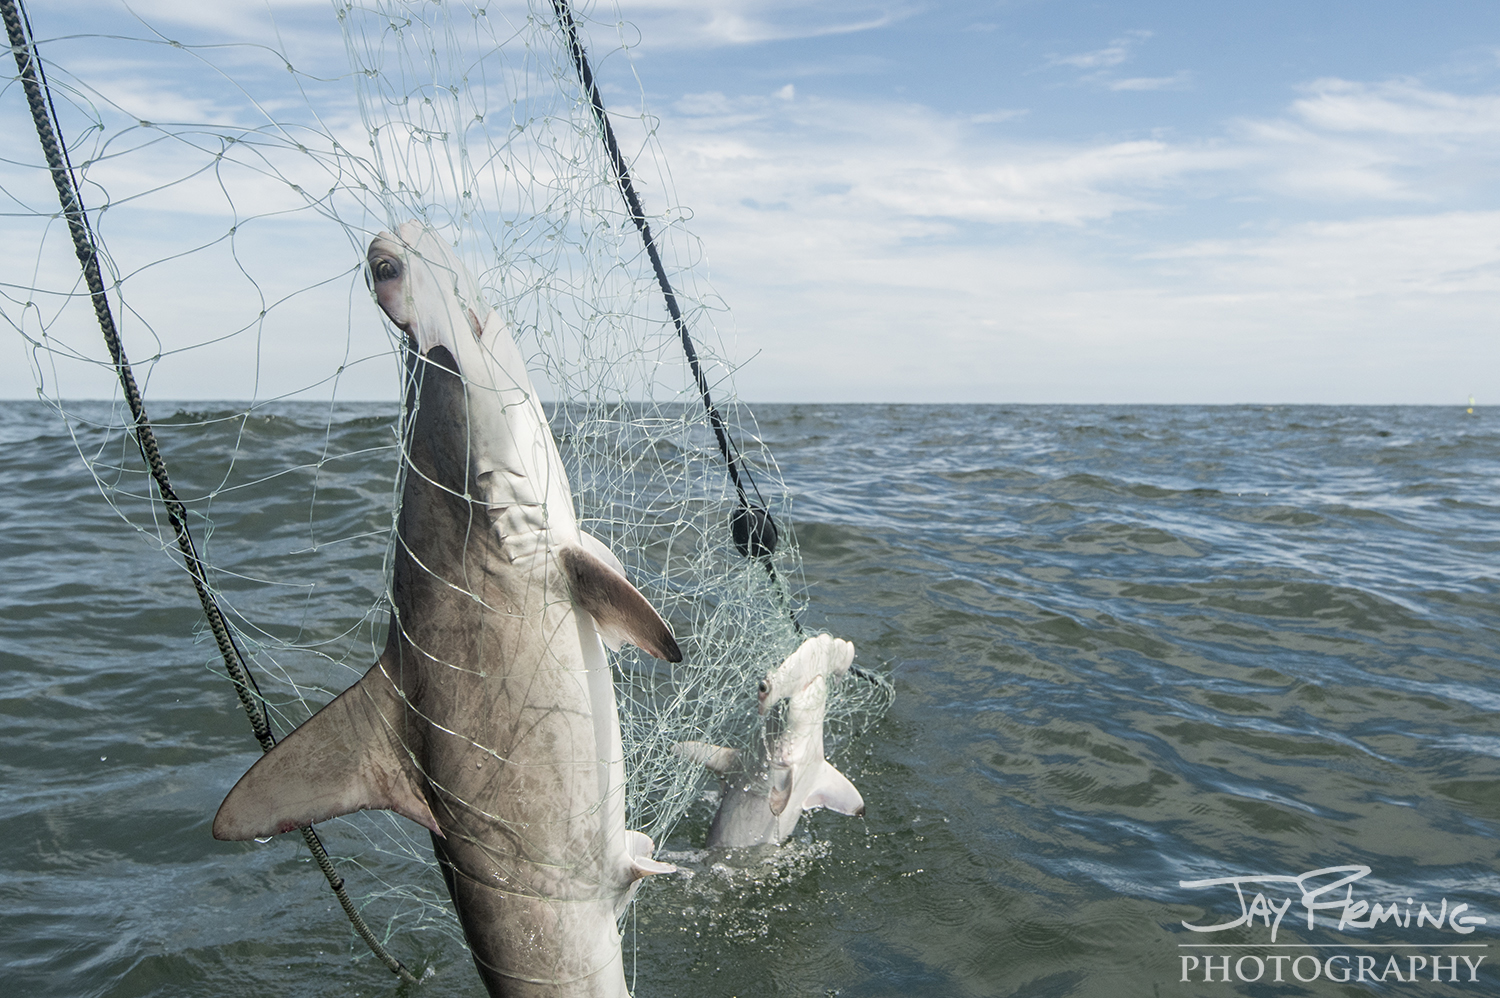 Fisheries © Jay Fleming08.jpg